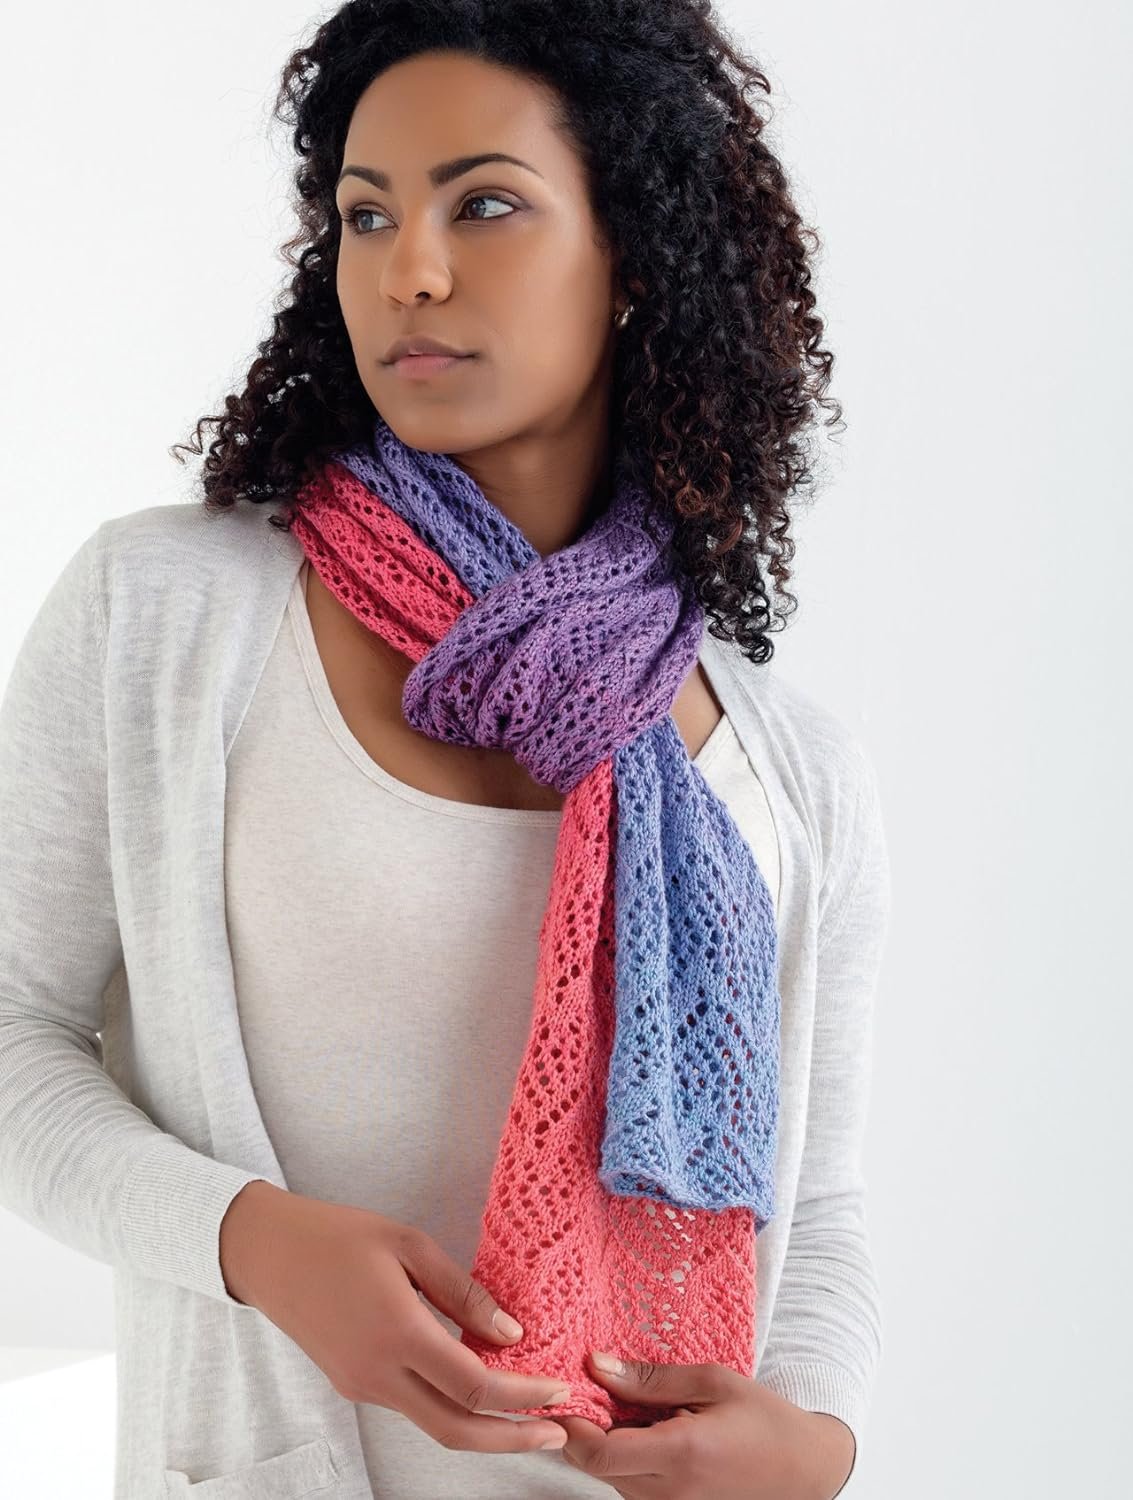 Sock-Yarn Shawls II: 16 Patterns for Lace Knitting